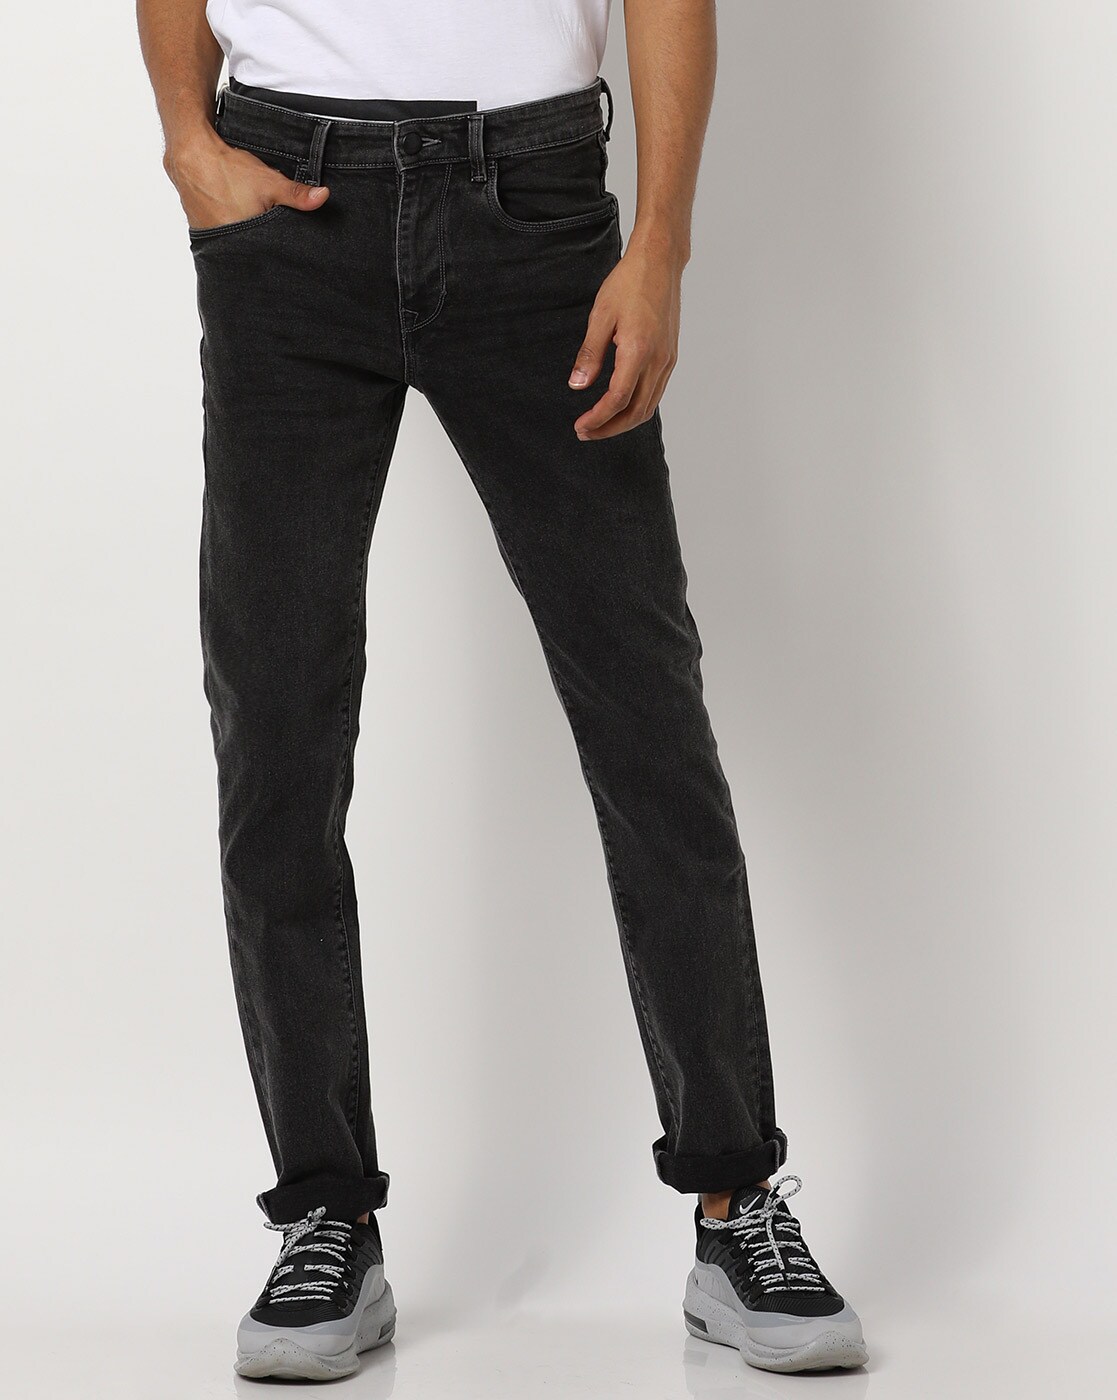 black polo jeans